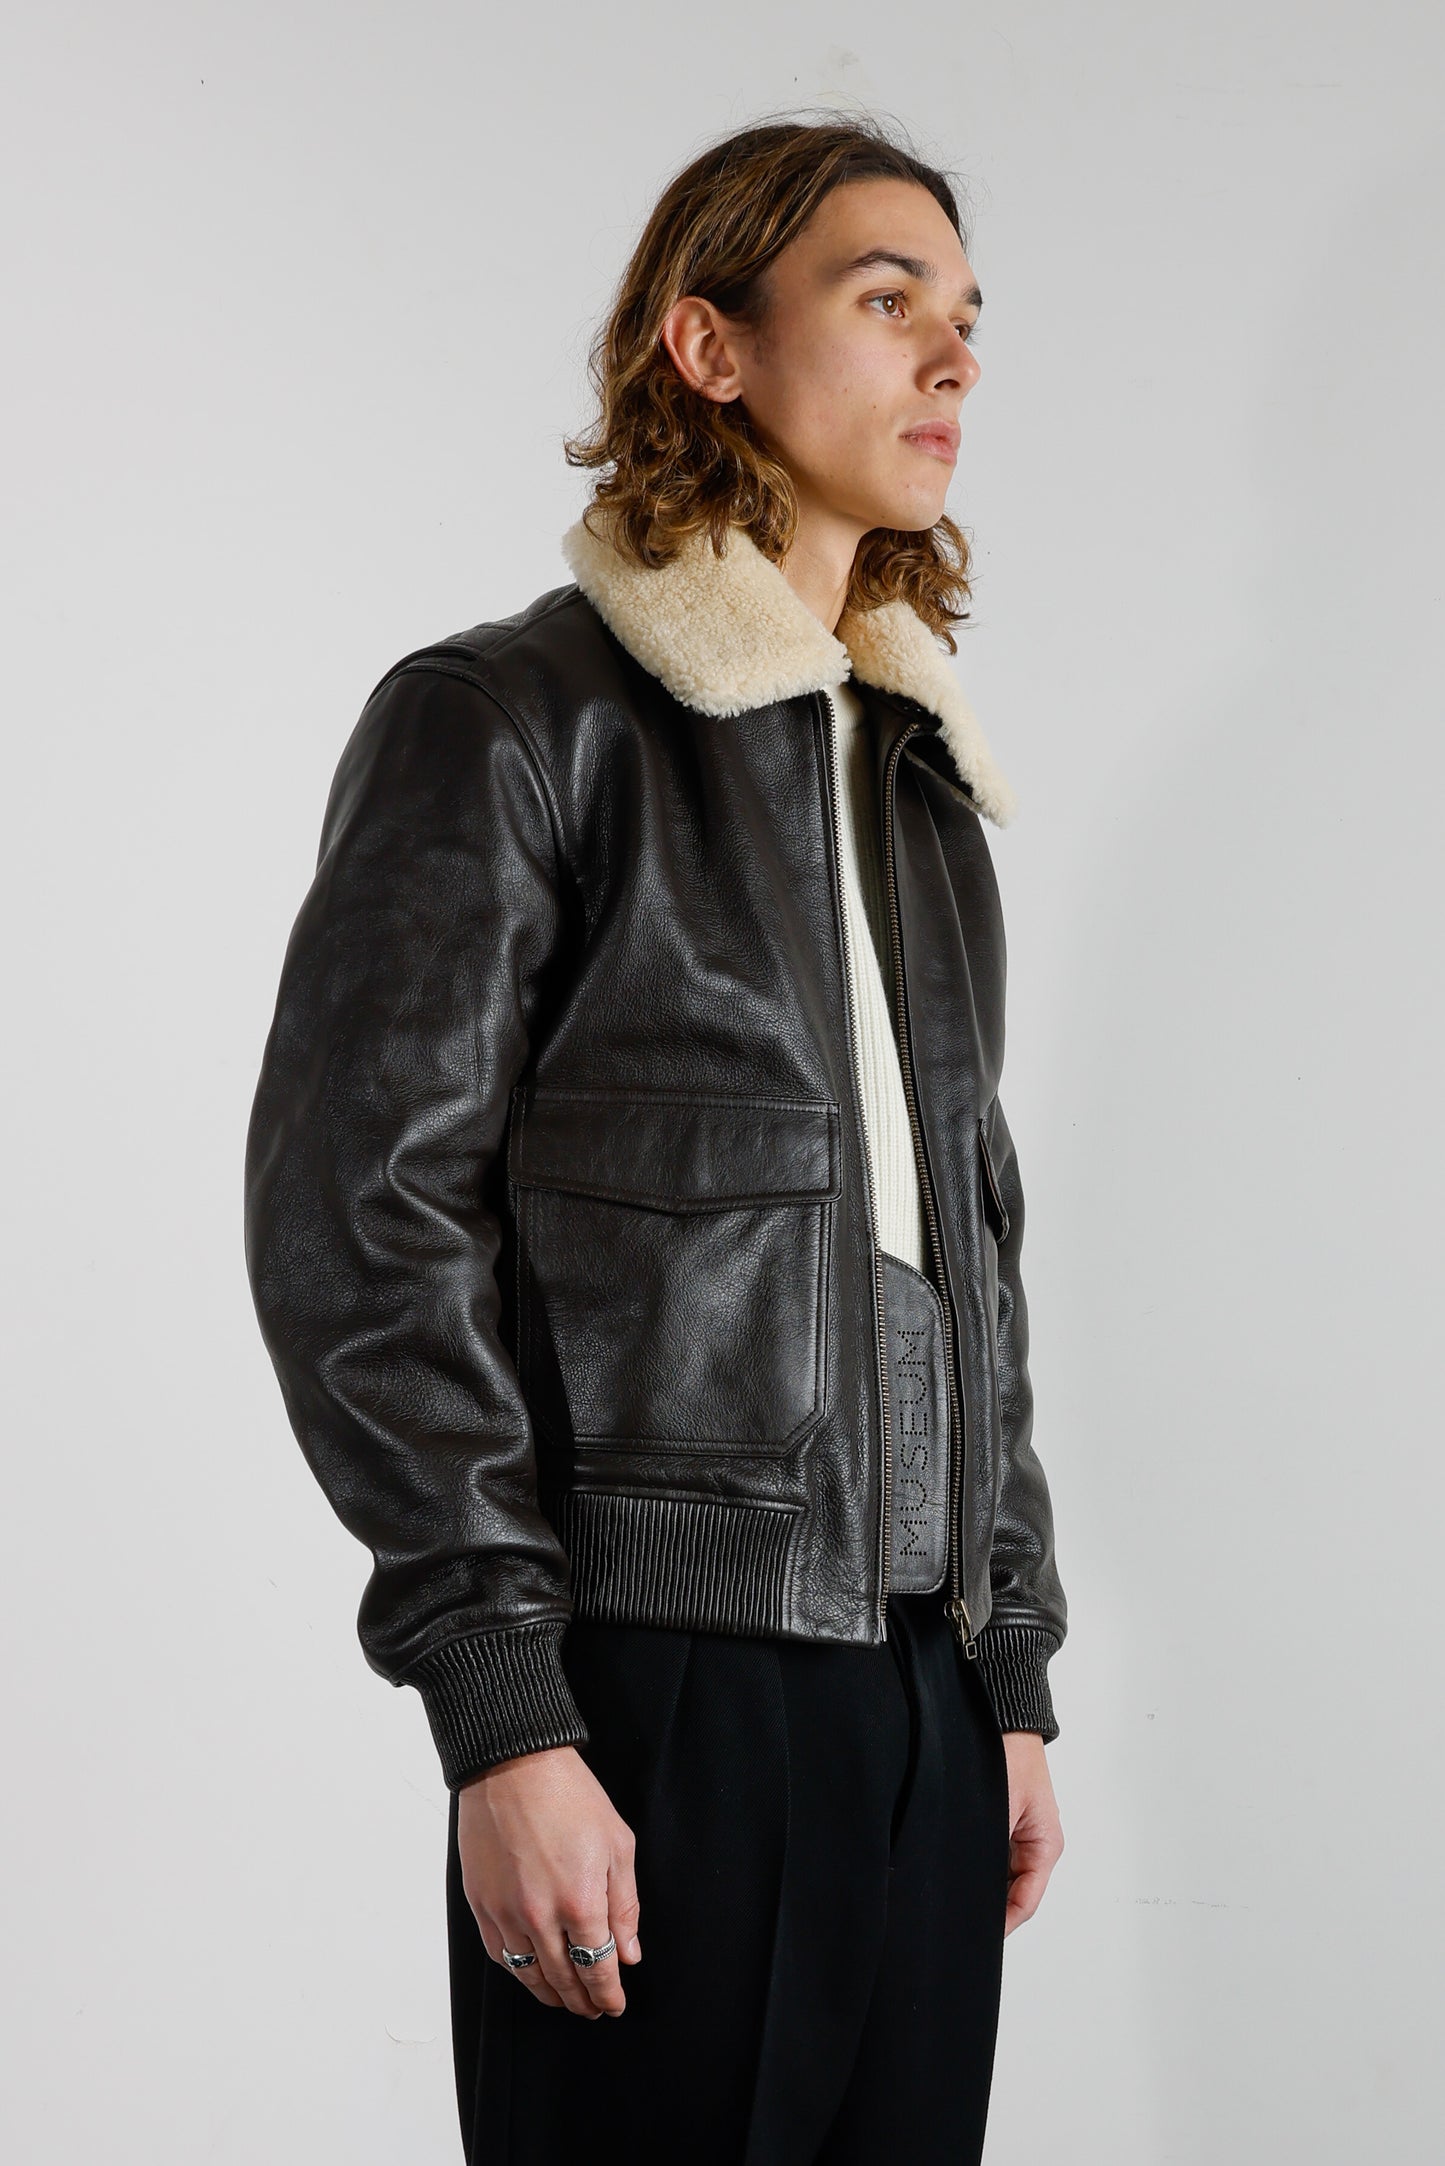 Flight Jacket - Brown Leather